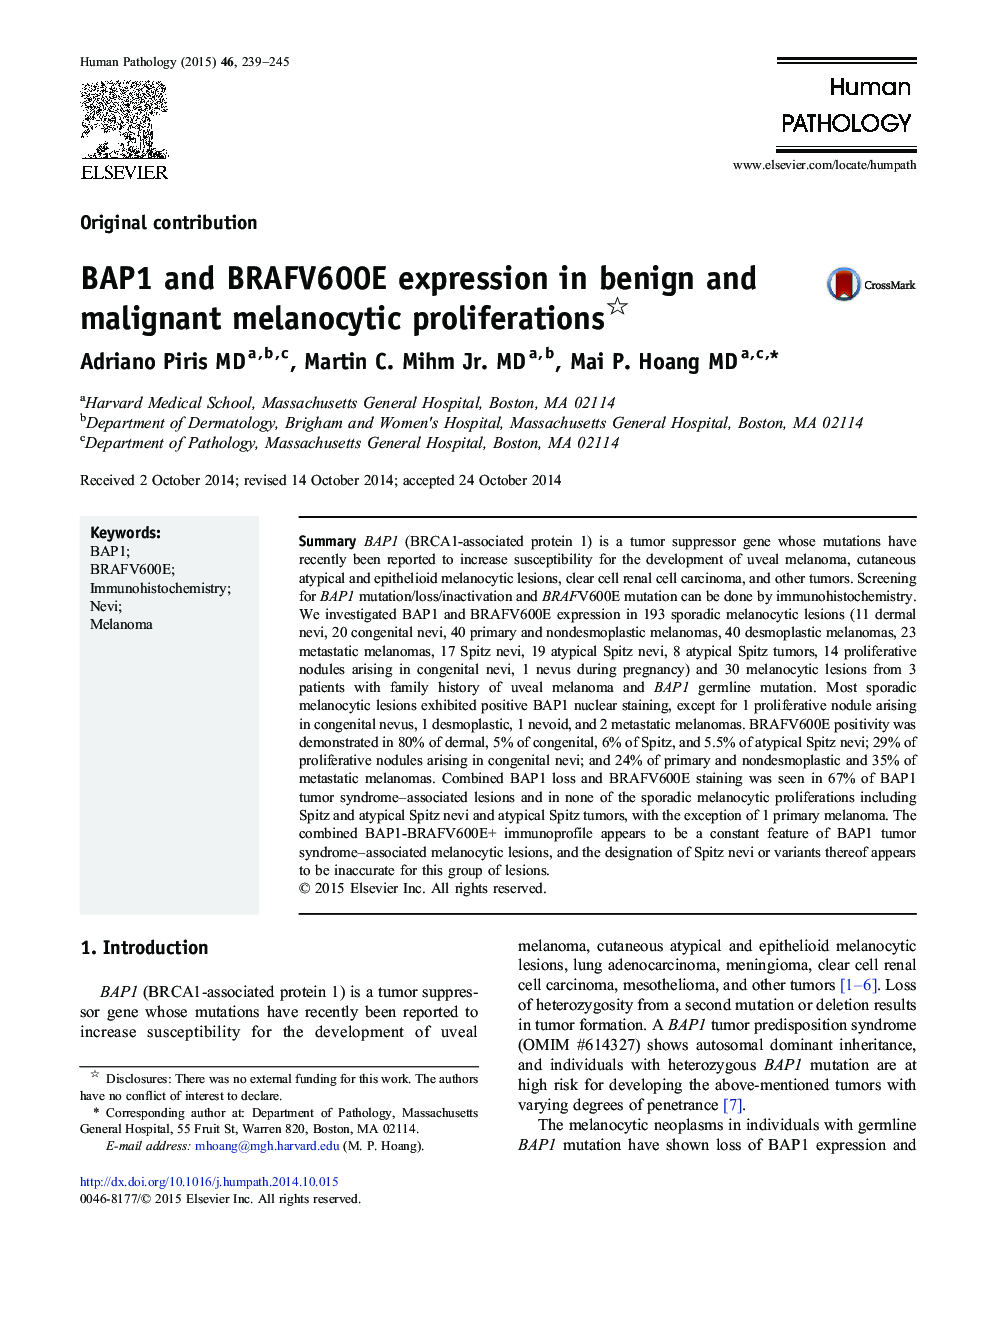 BAP1 and BRAFV600E expression in benign and malignant melanocytic proliferations 